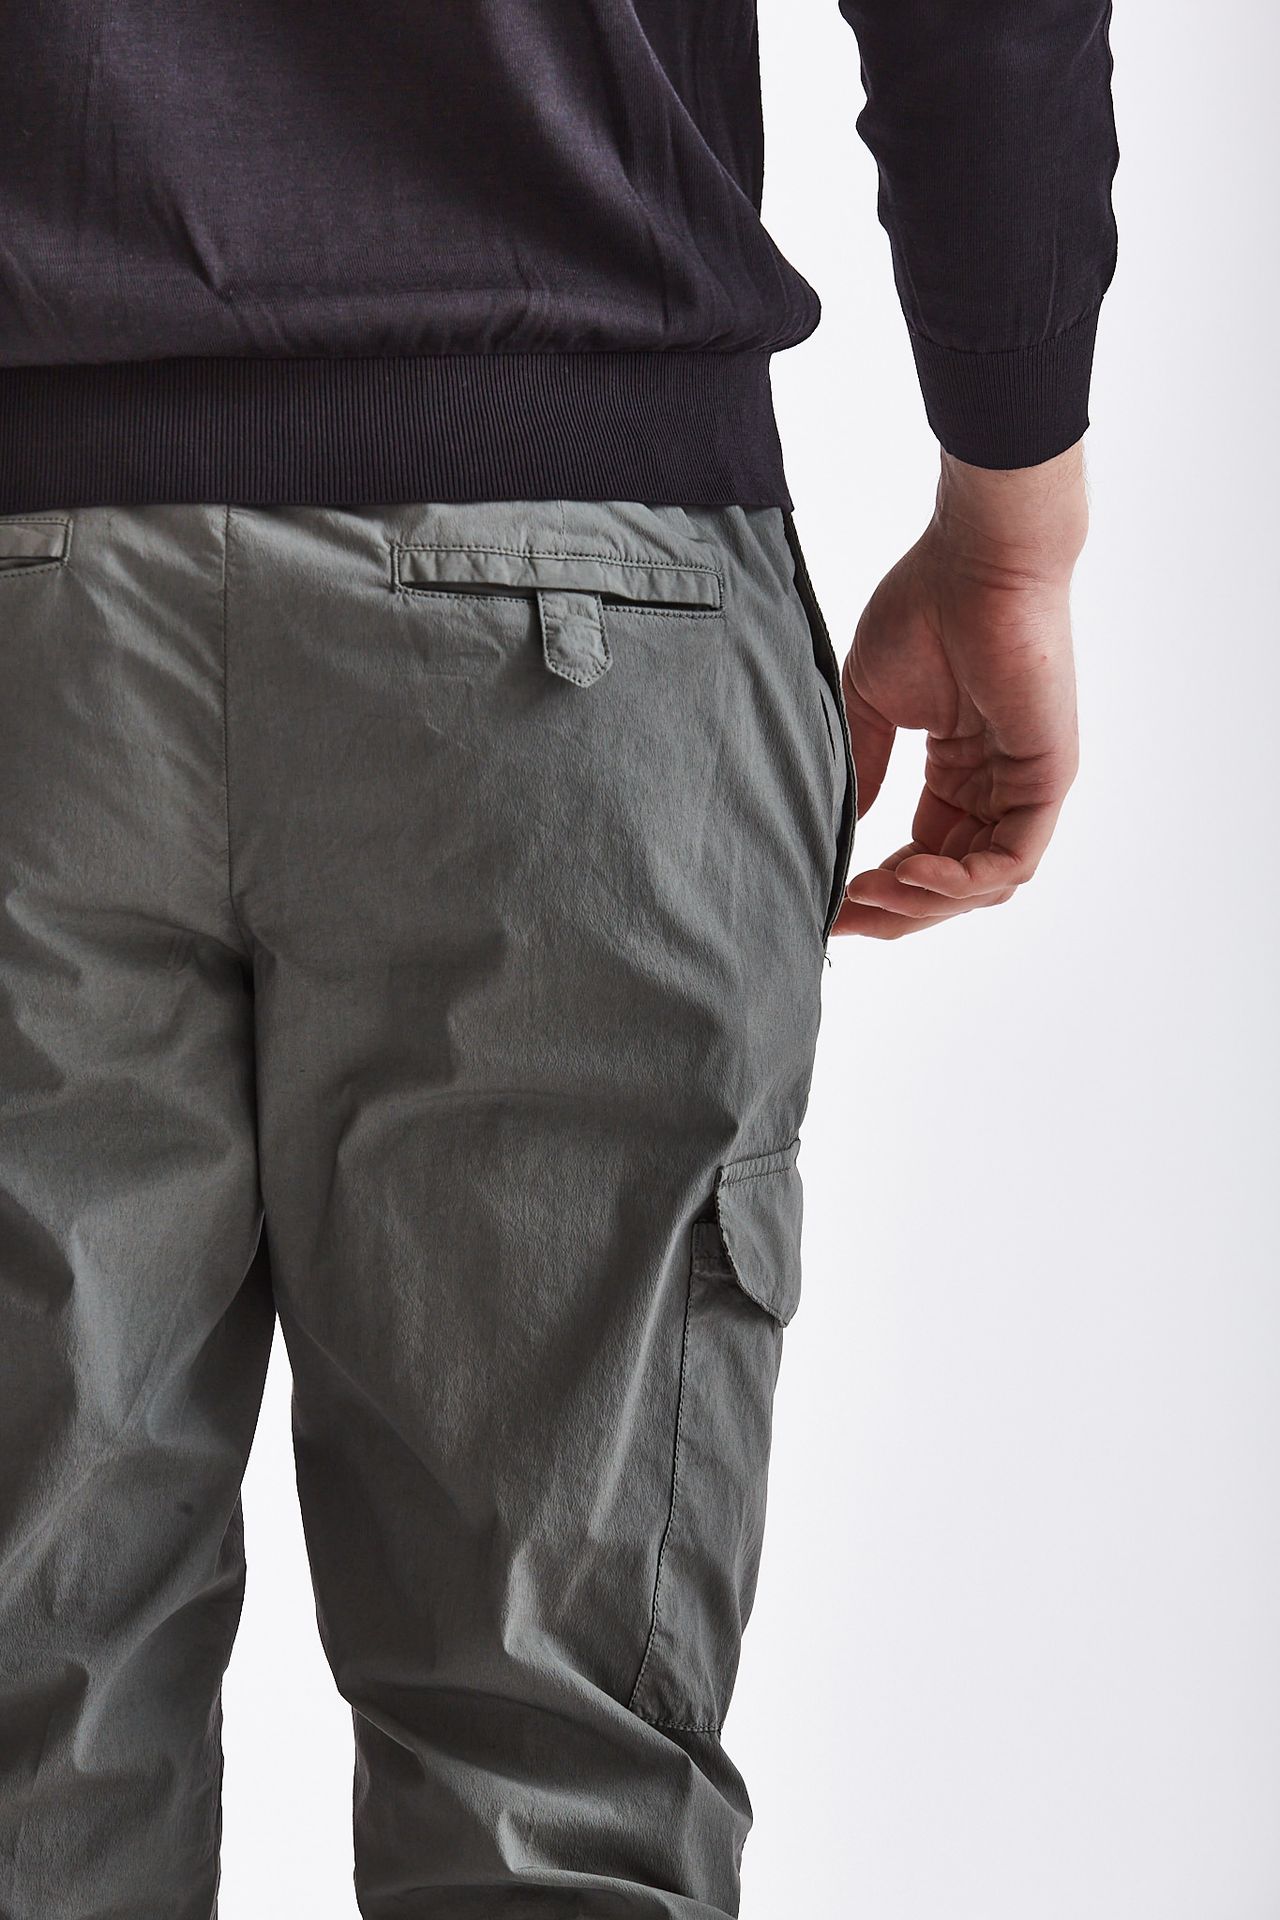 Pantalone SOFT FIT in cotone verde